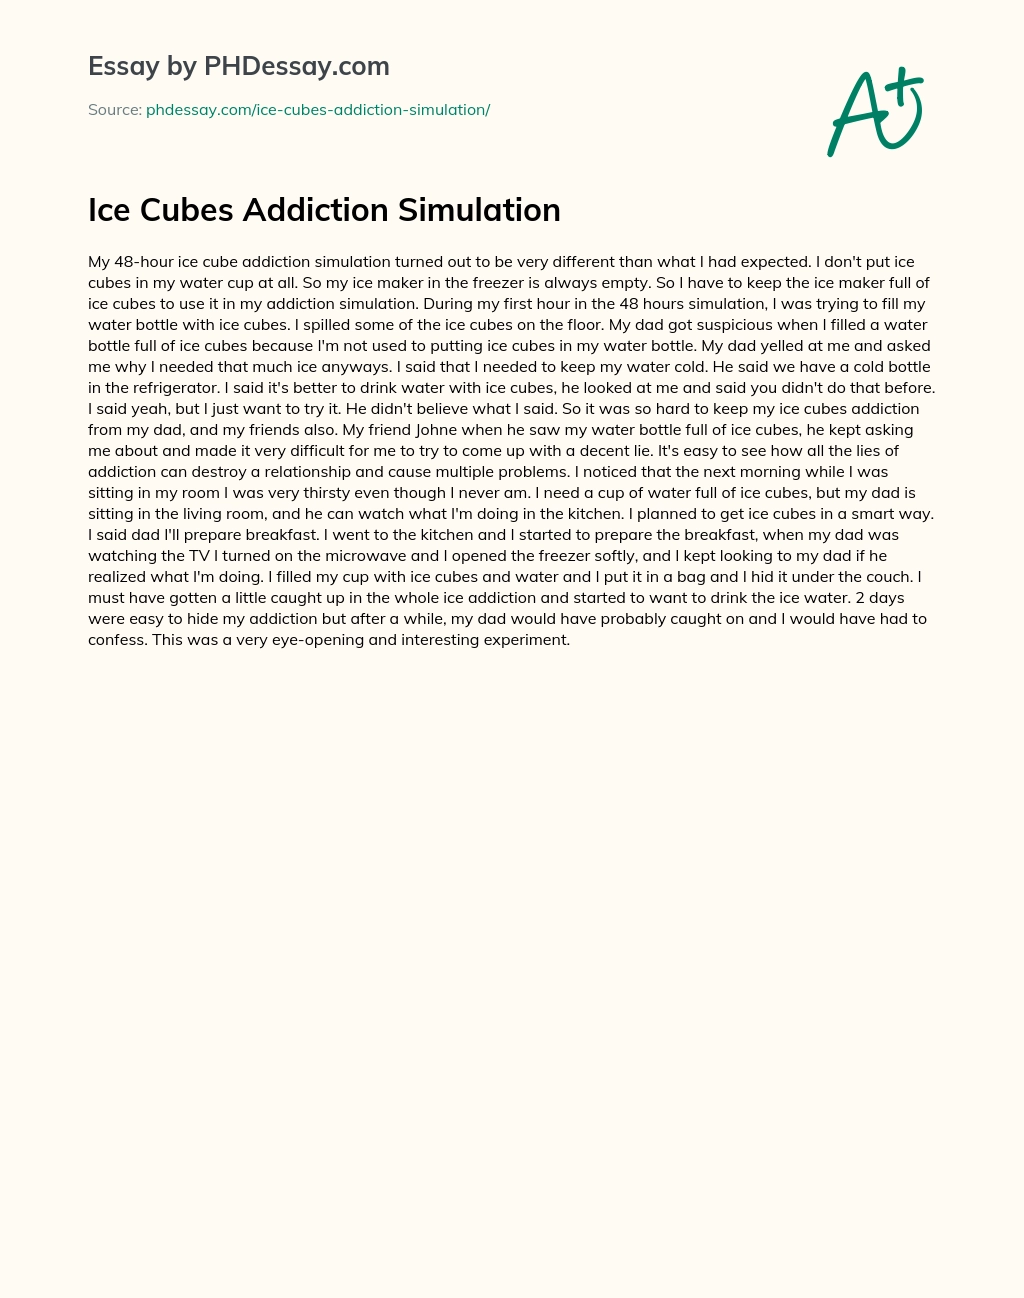 Ice Cubes Addiction Simulation essay